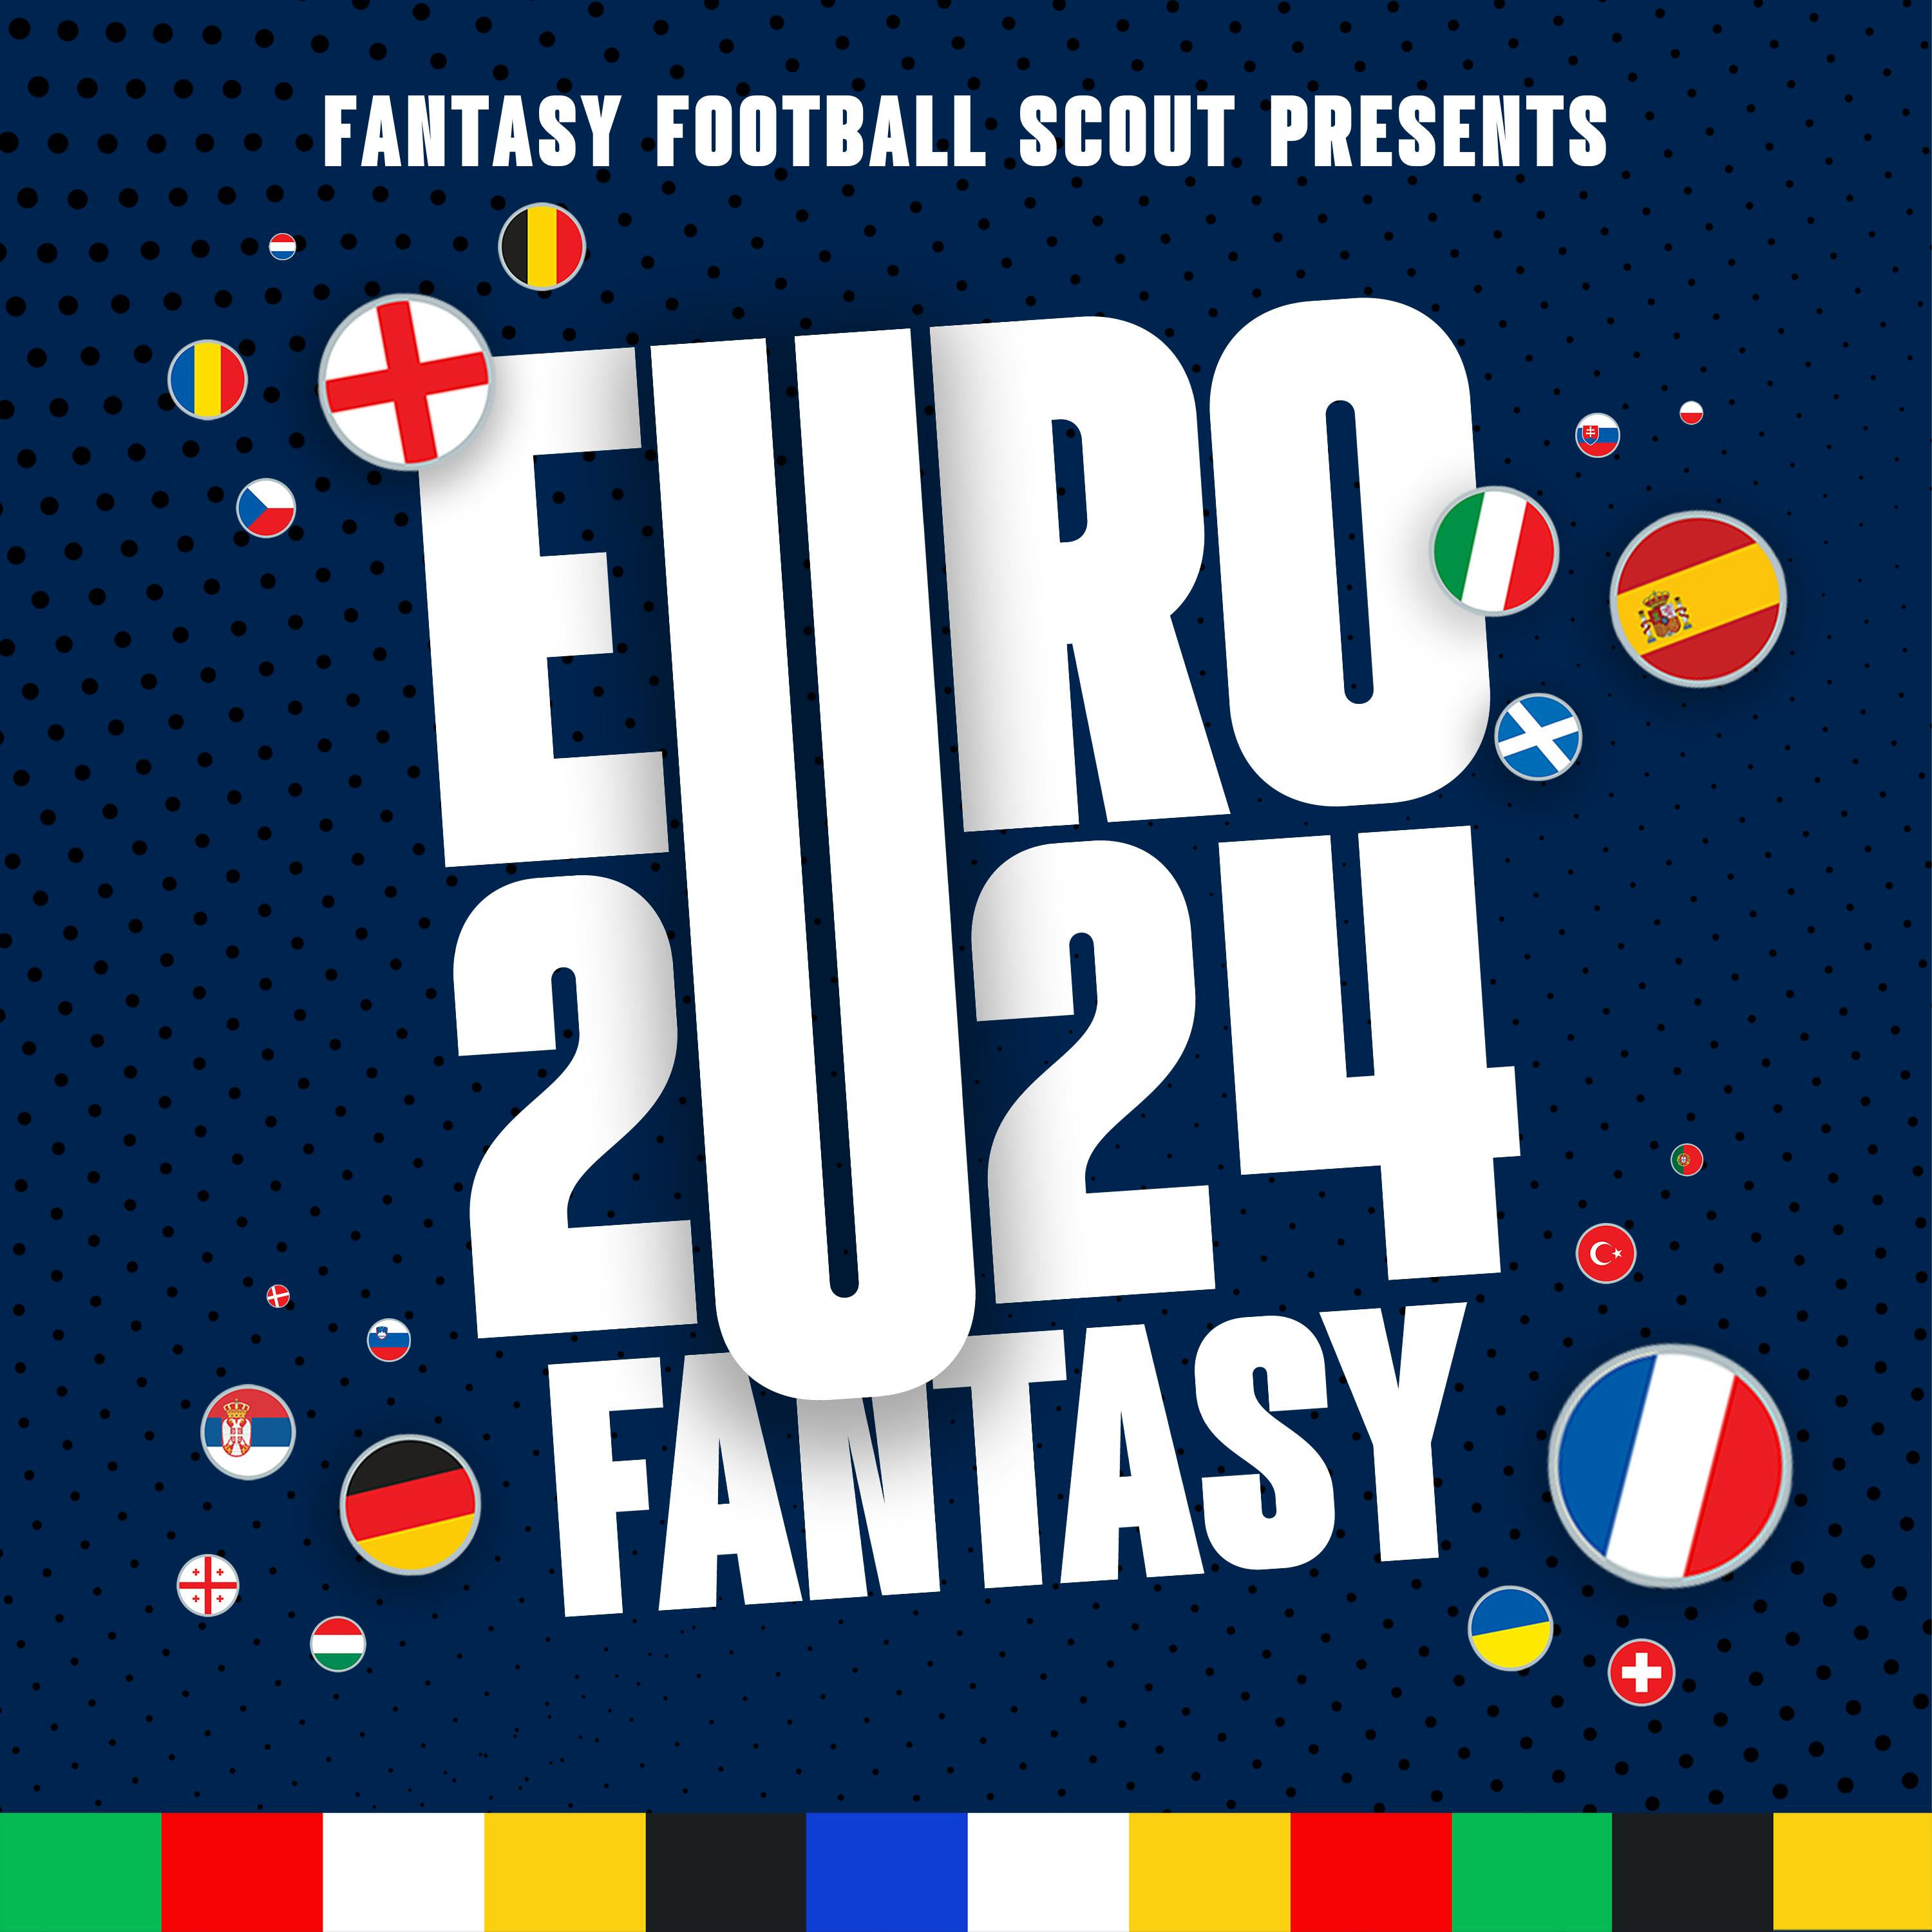 Euro 2024 Fantasy: Group B Preview 🇪🇸 🇭🇷 🇮🇹 🇦🇱